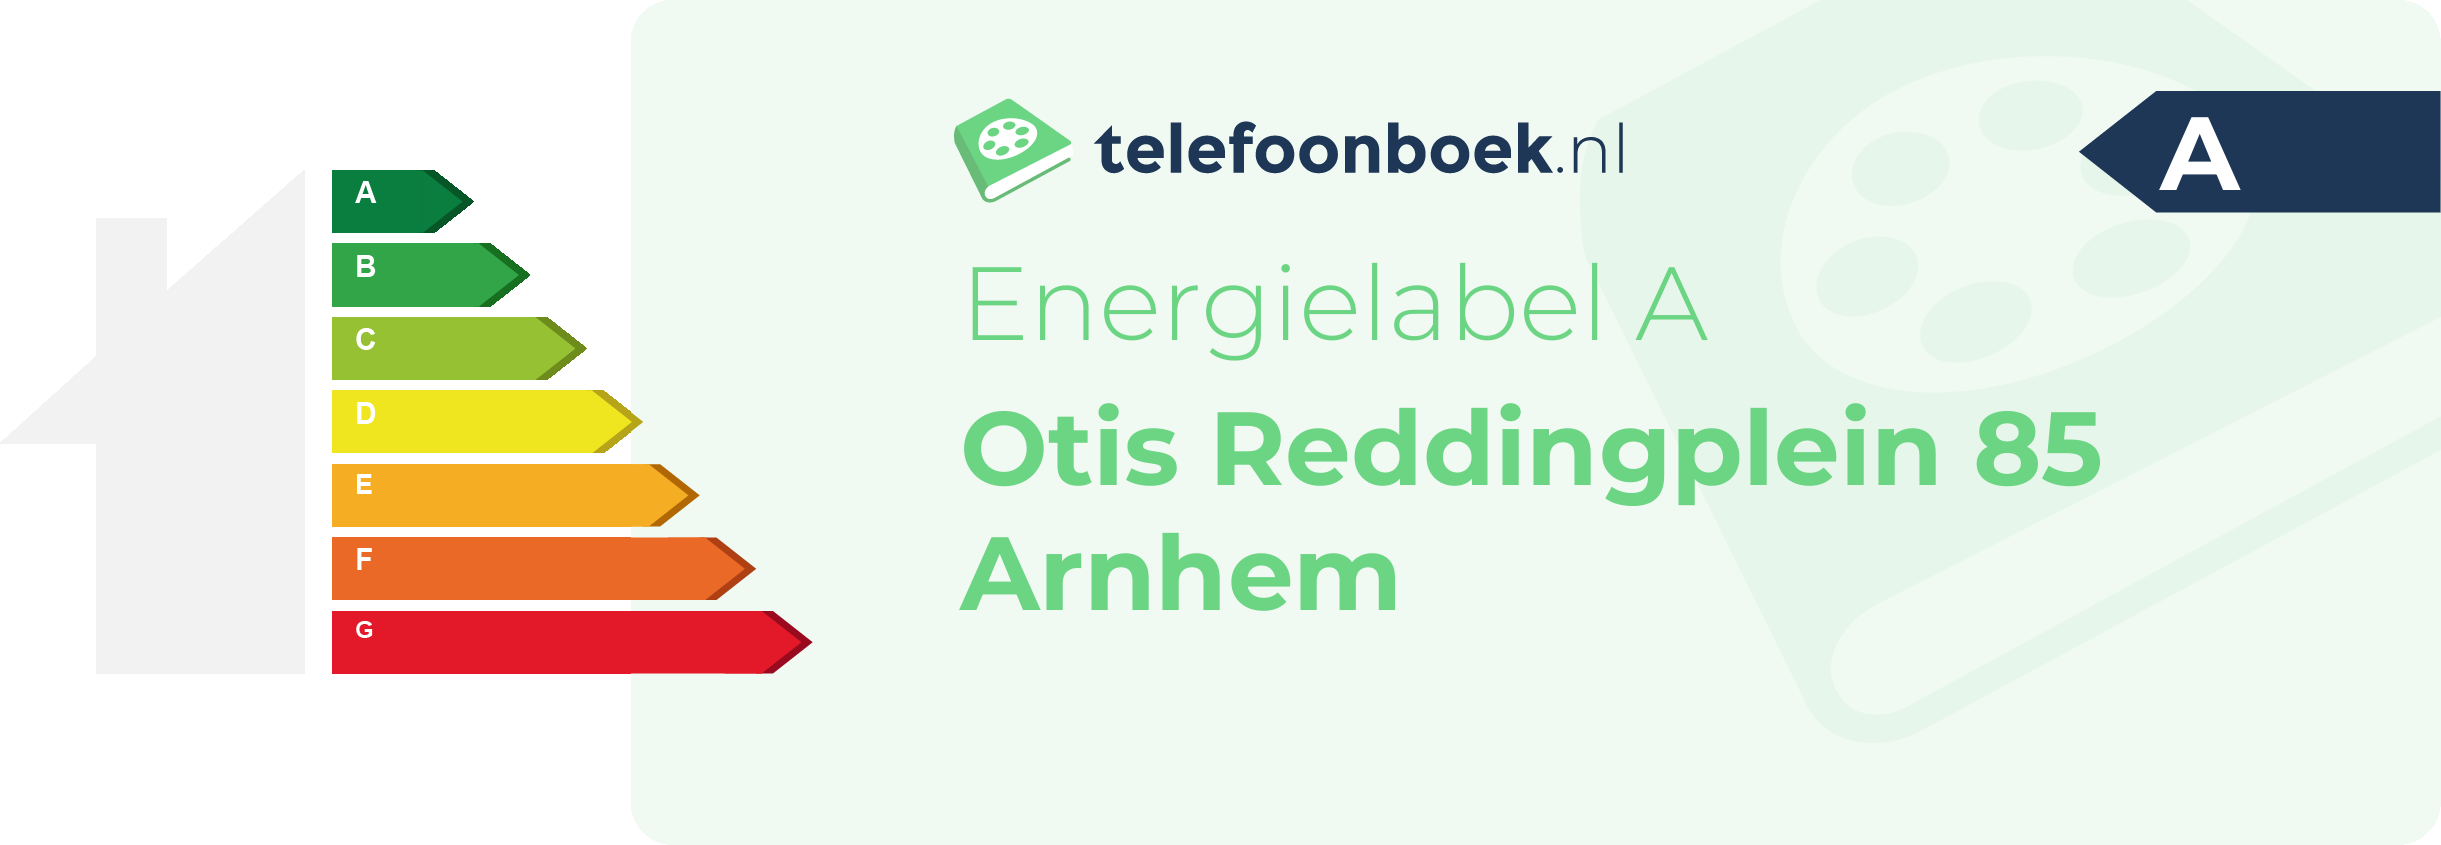 Energielabel Otis Reddingplein 85 Arnhem